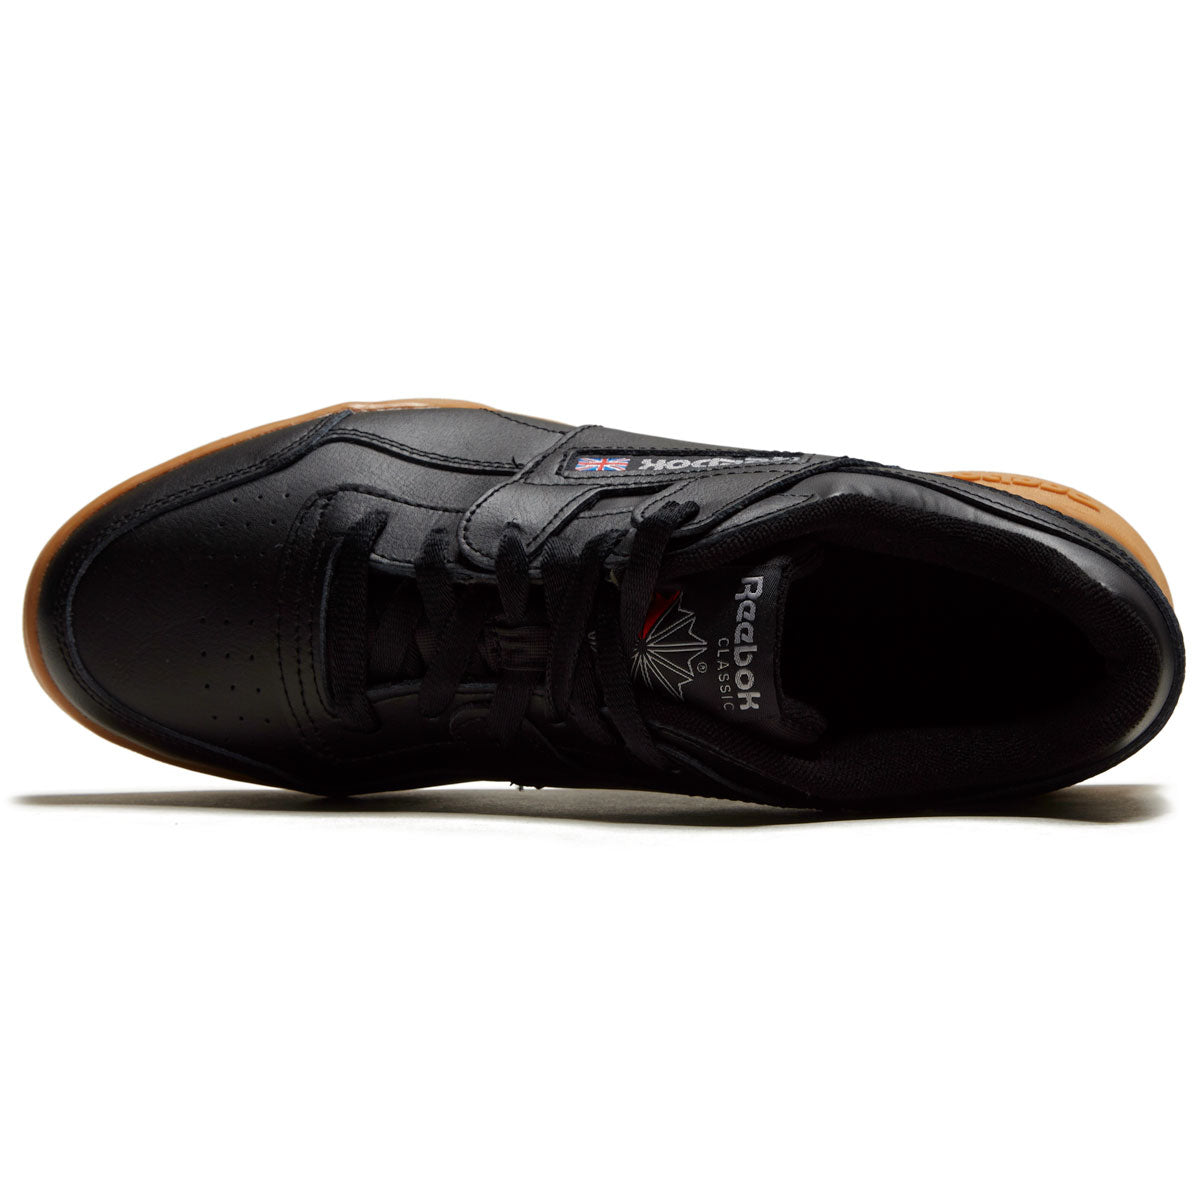 Reebok Workout Plus Shoes - Black/Carbon/Classic Red/Royal/Gum image 3